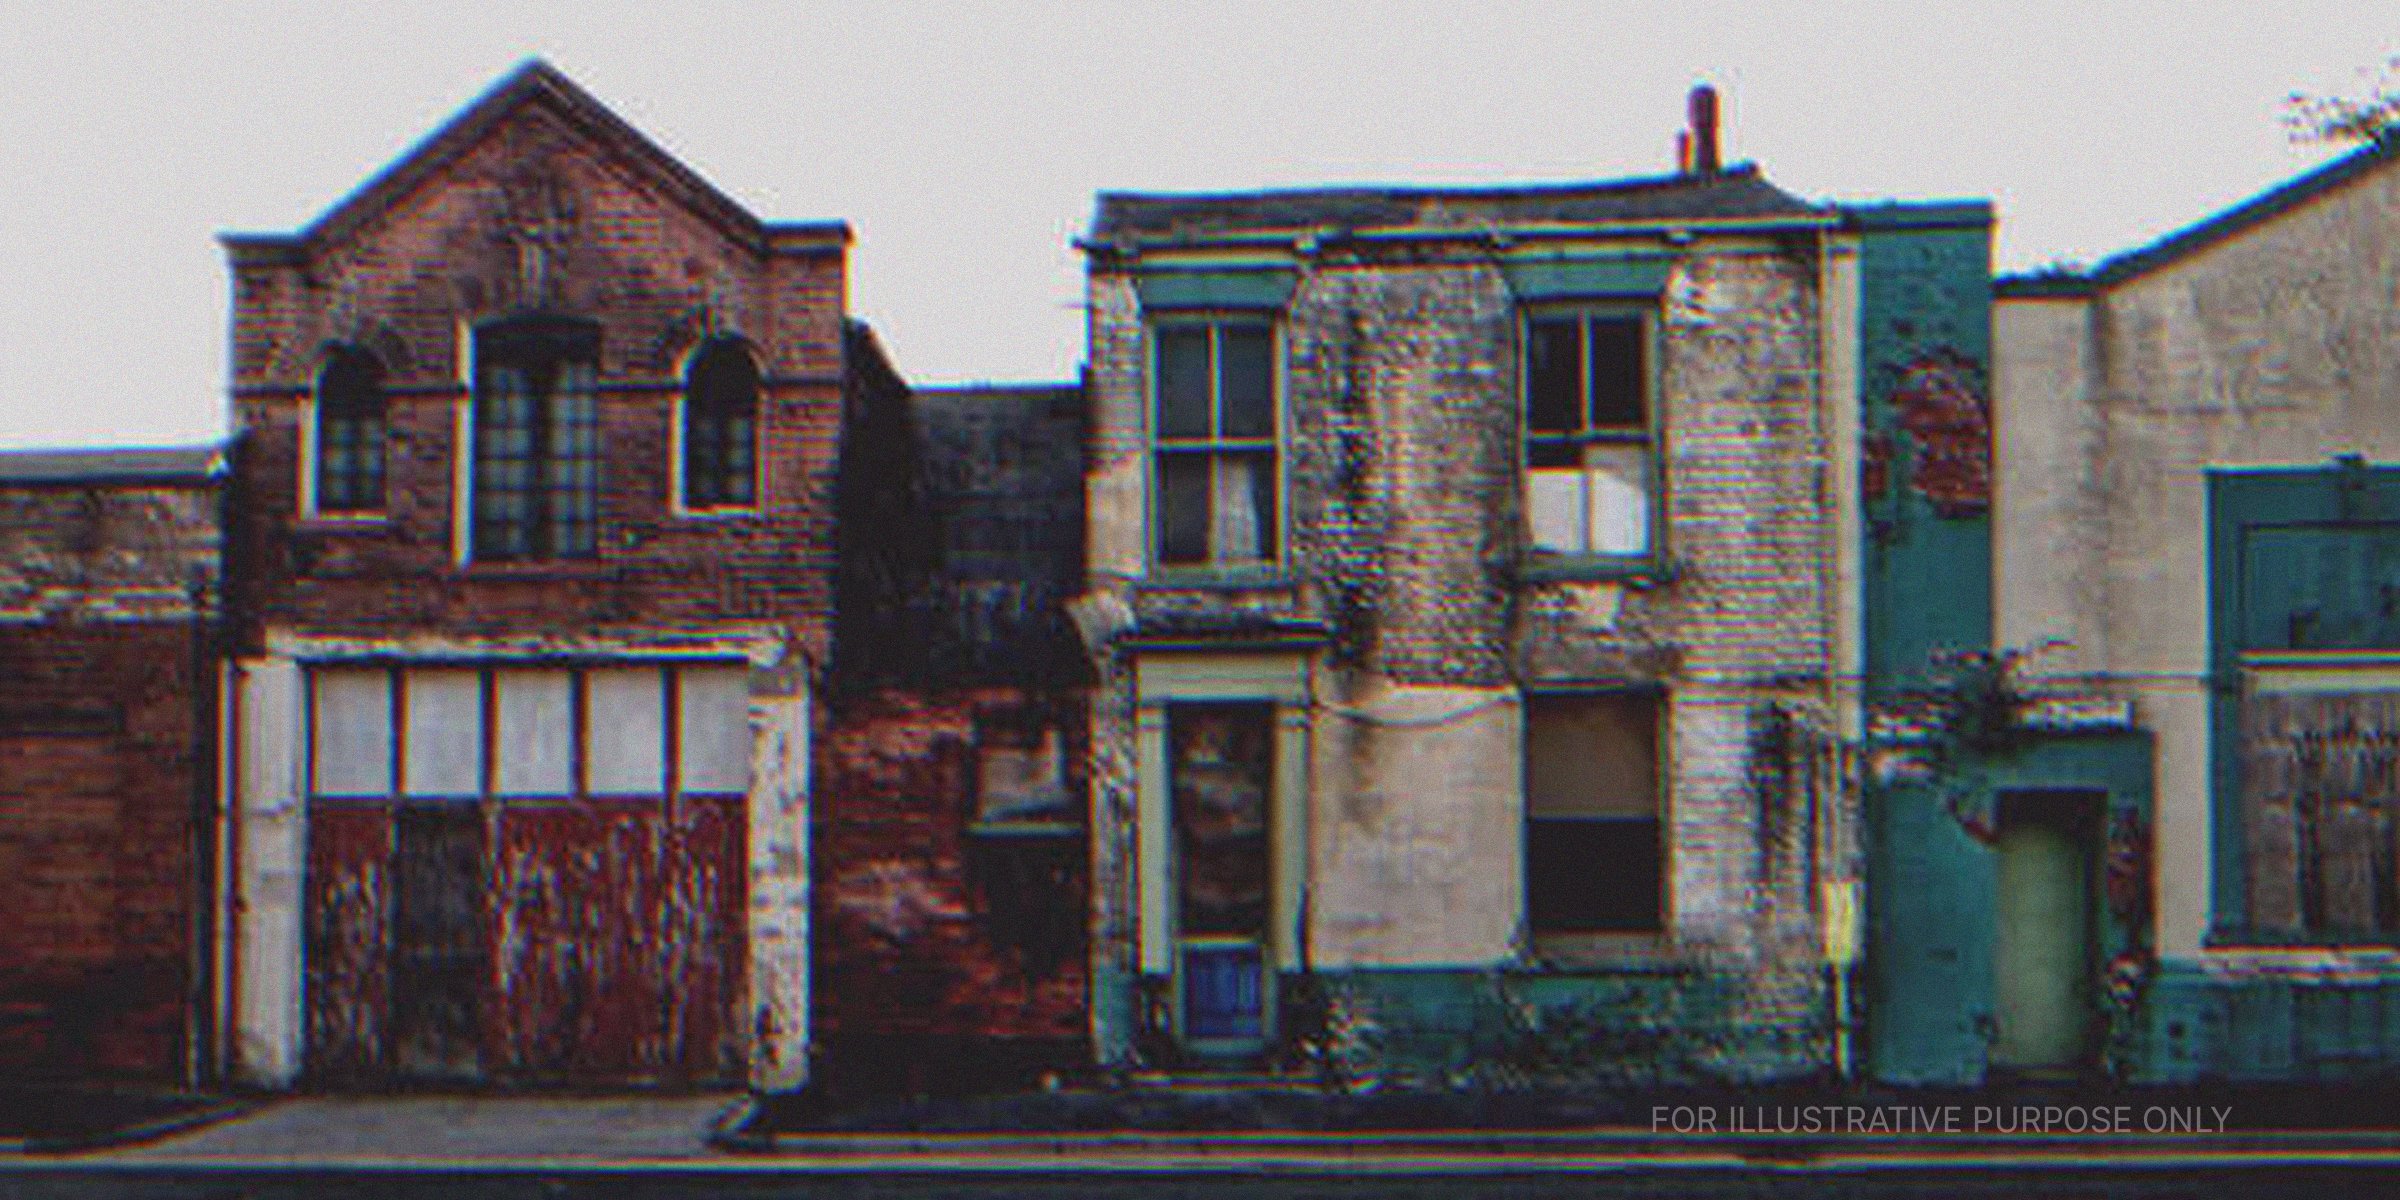 Verlassene Häuser. | Quelle: Shutterstock